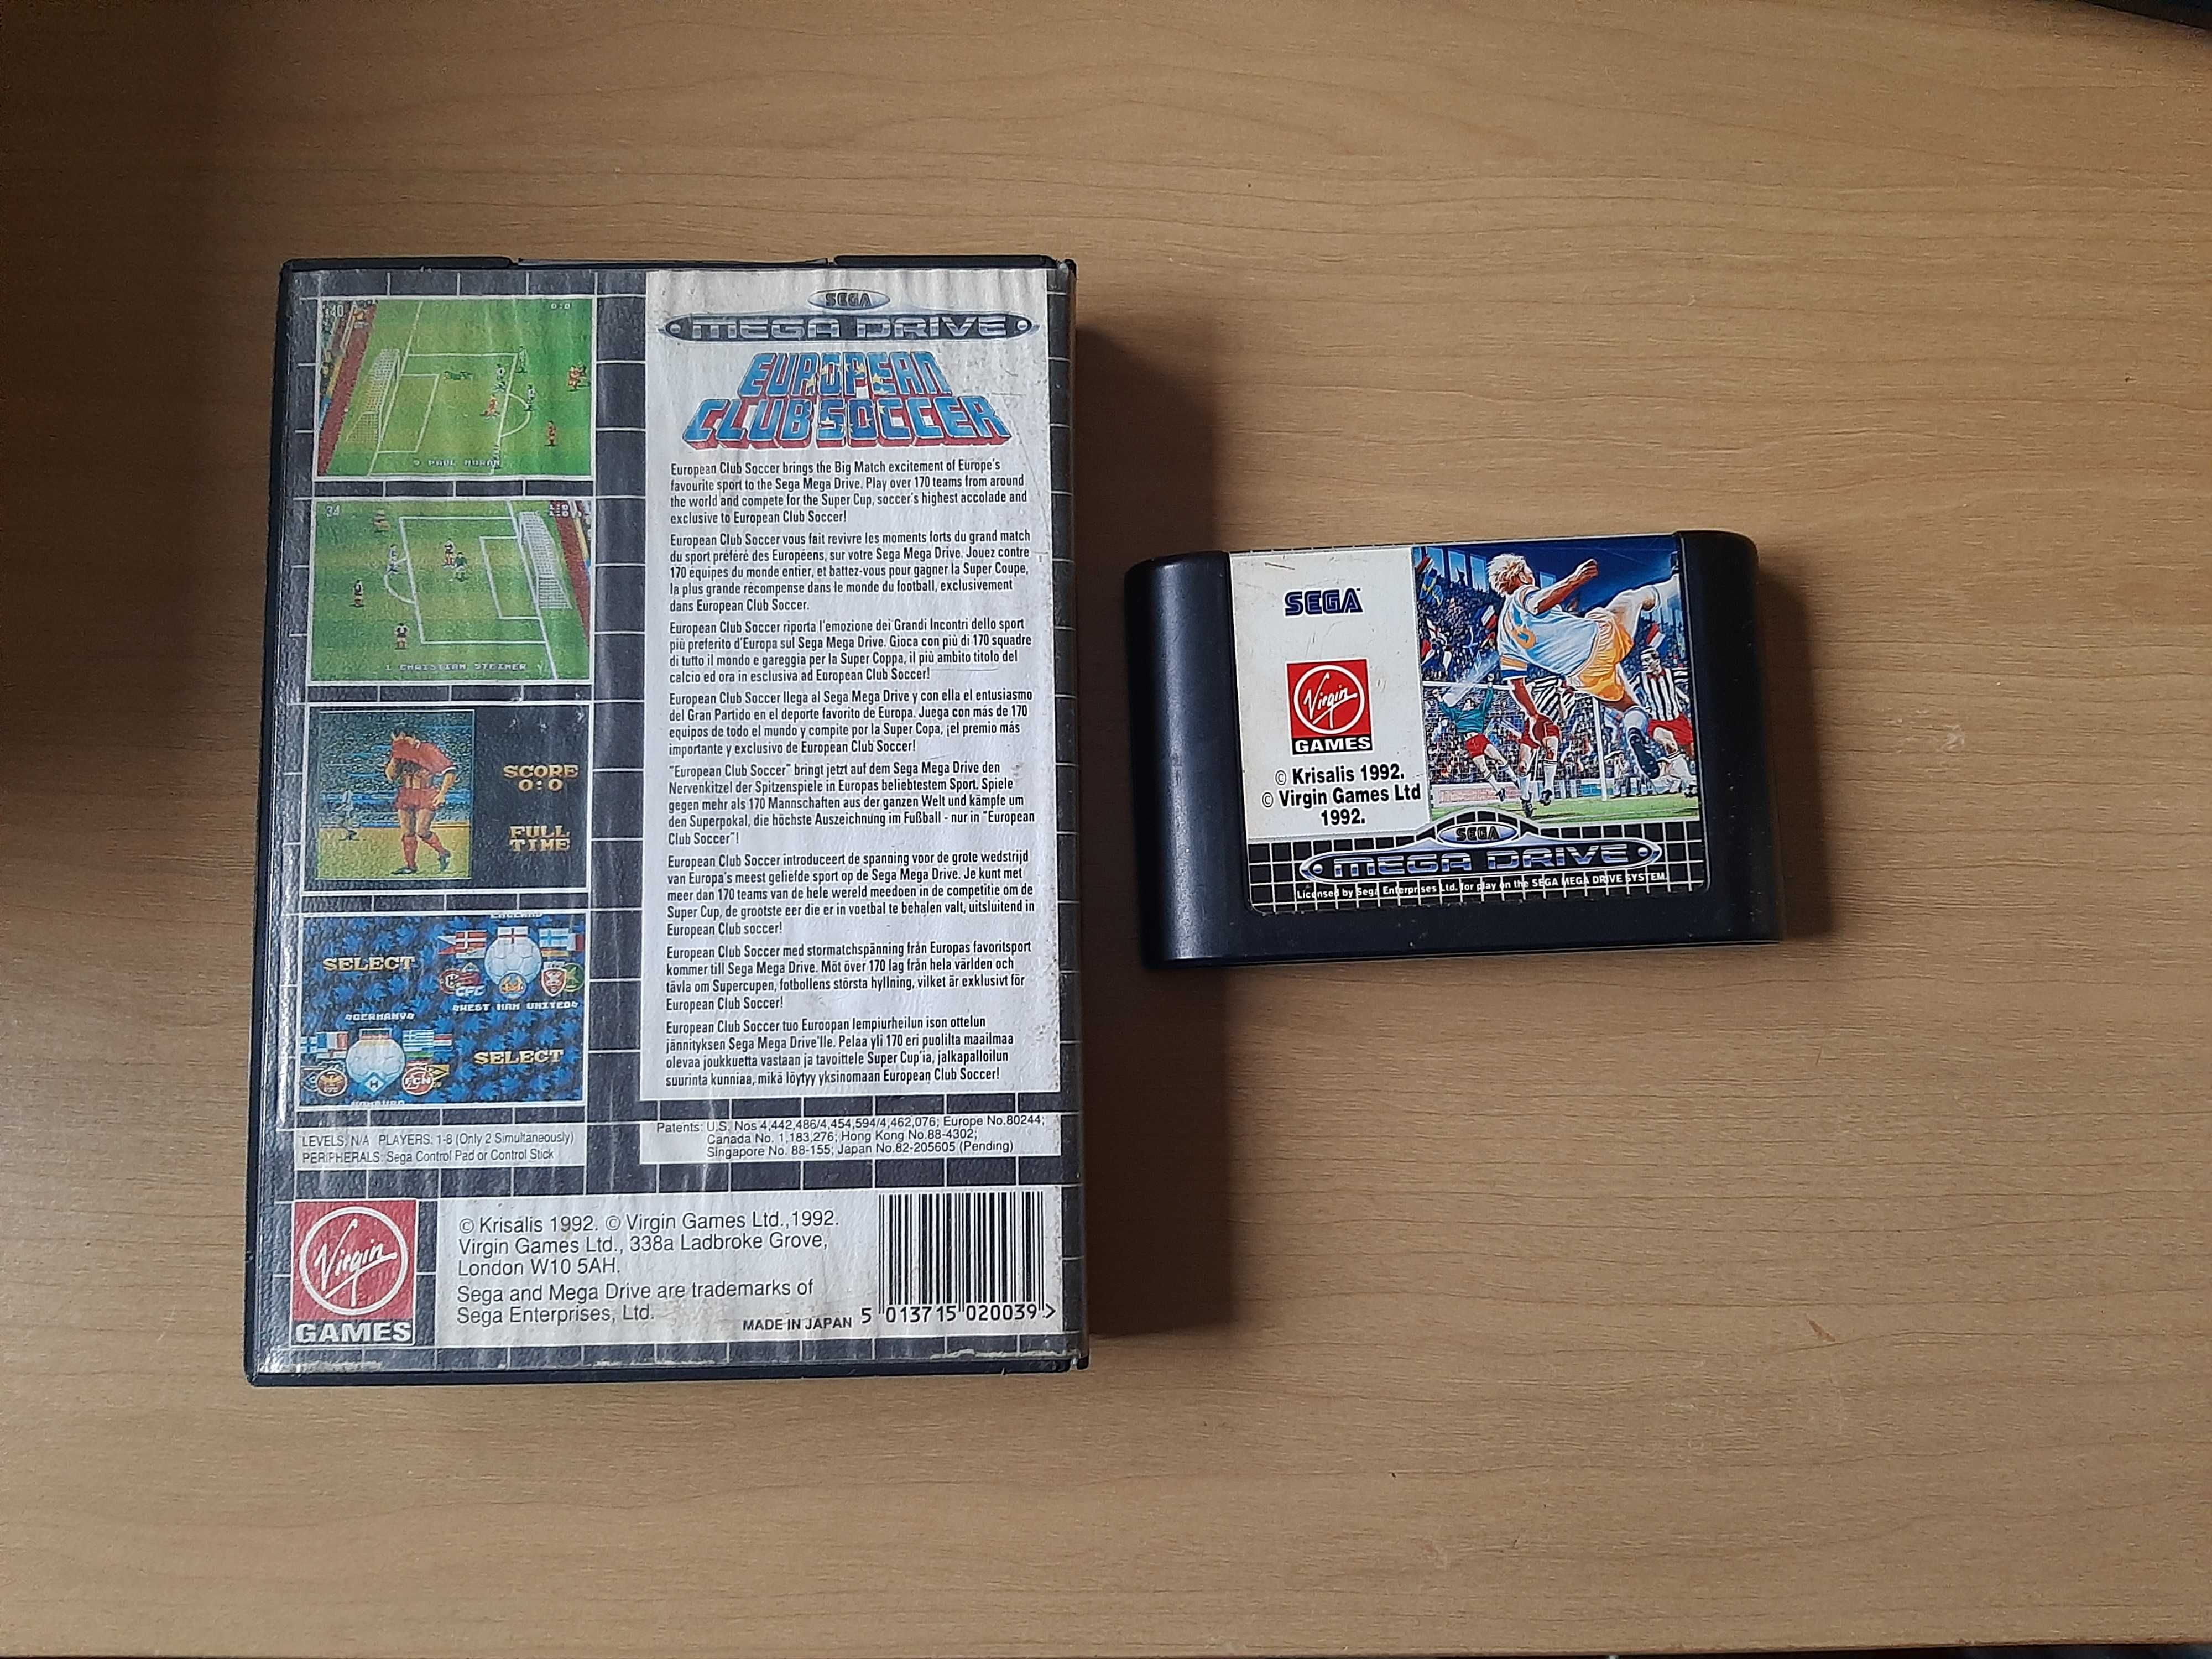 European Club Soccer - Sega Mega Drive